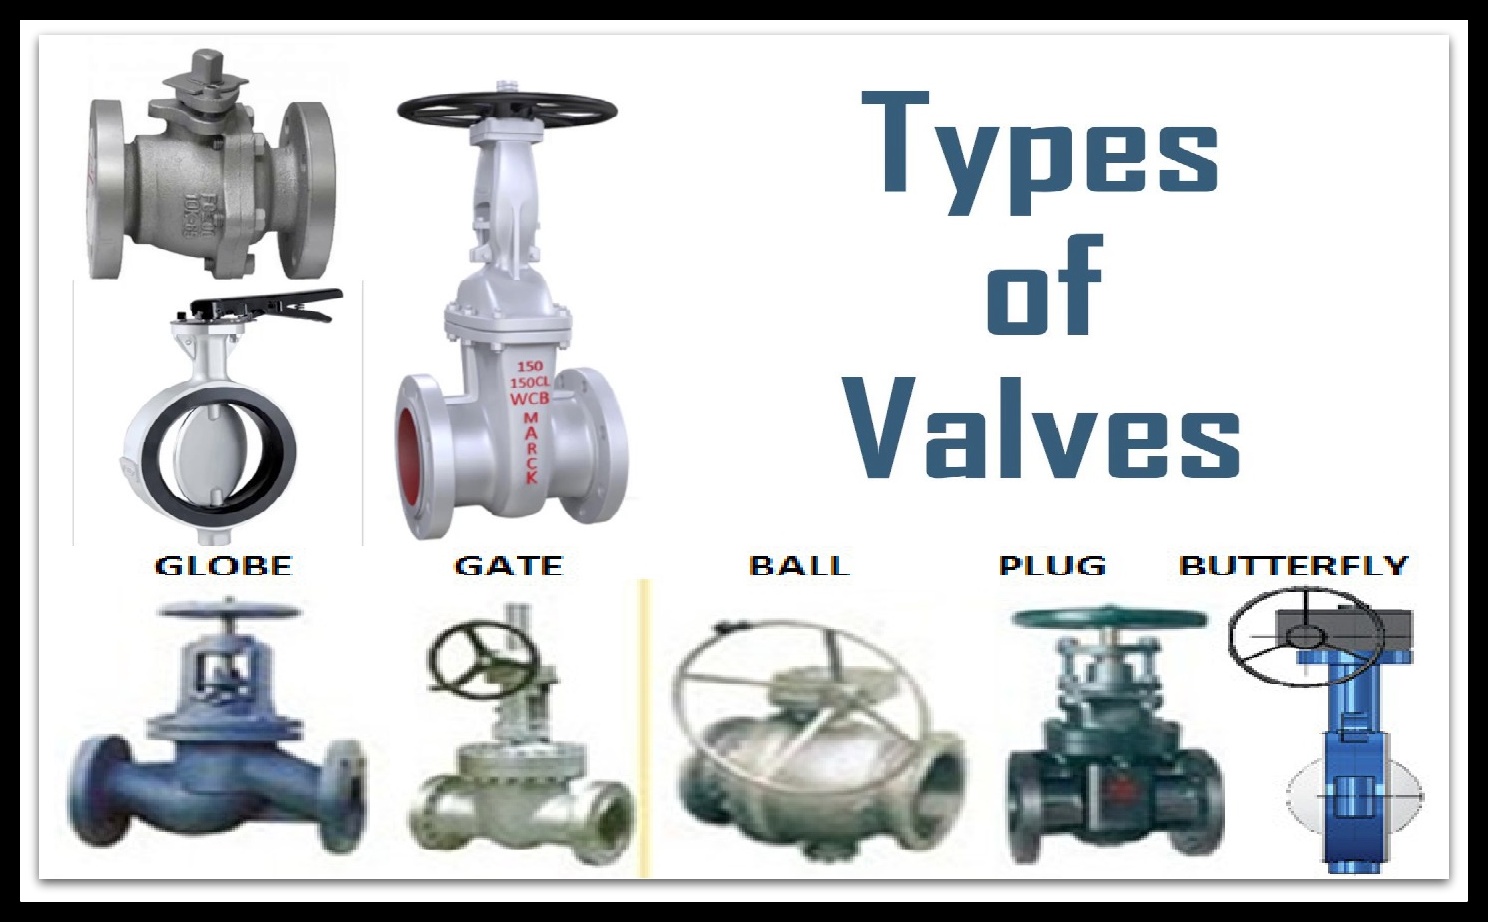 5-Major-Types-of-Valves-in-Plumbing-System-26d867dd